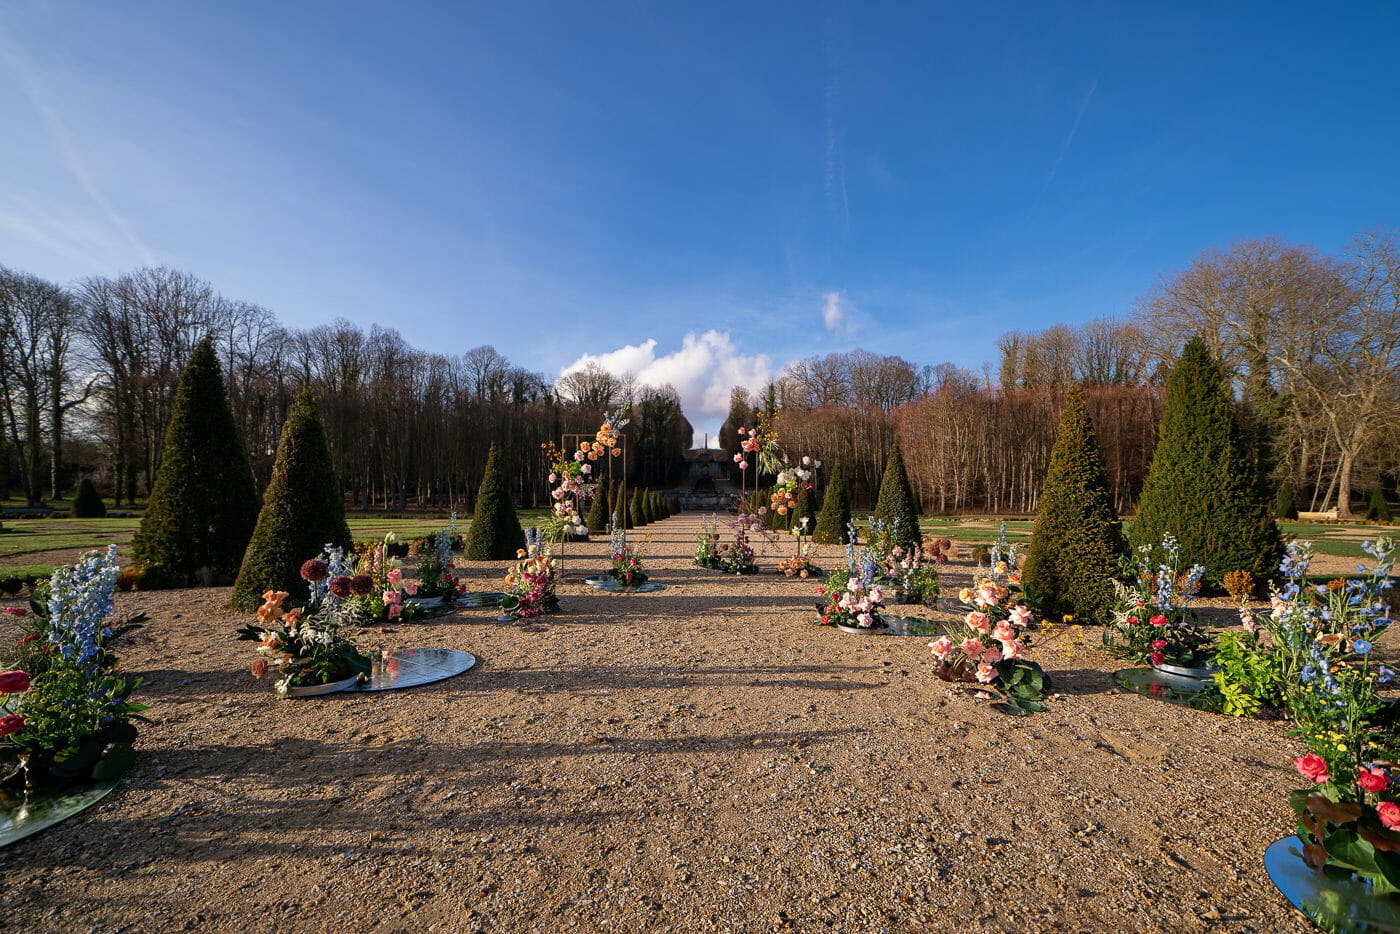 Fairytale marriage proposal setting with colorful floral design at Chateau de Villette in Paris